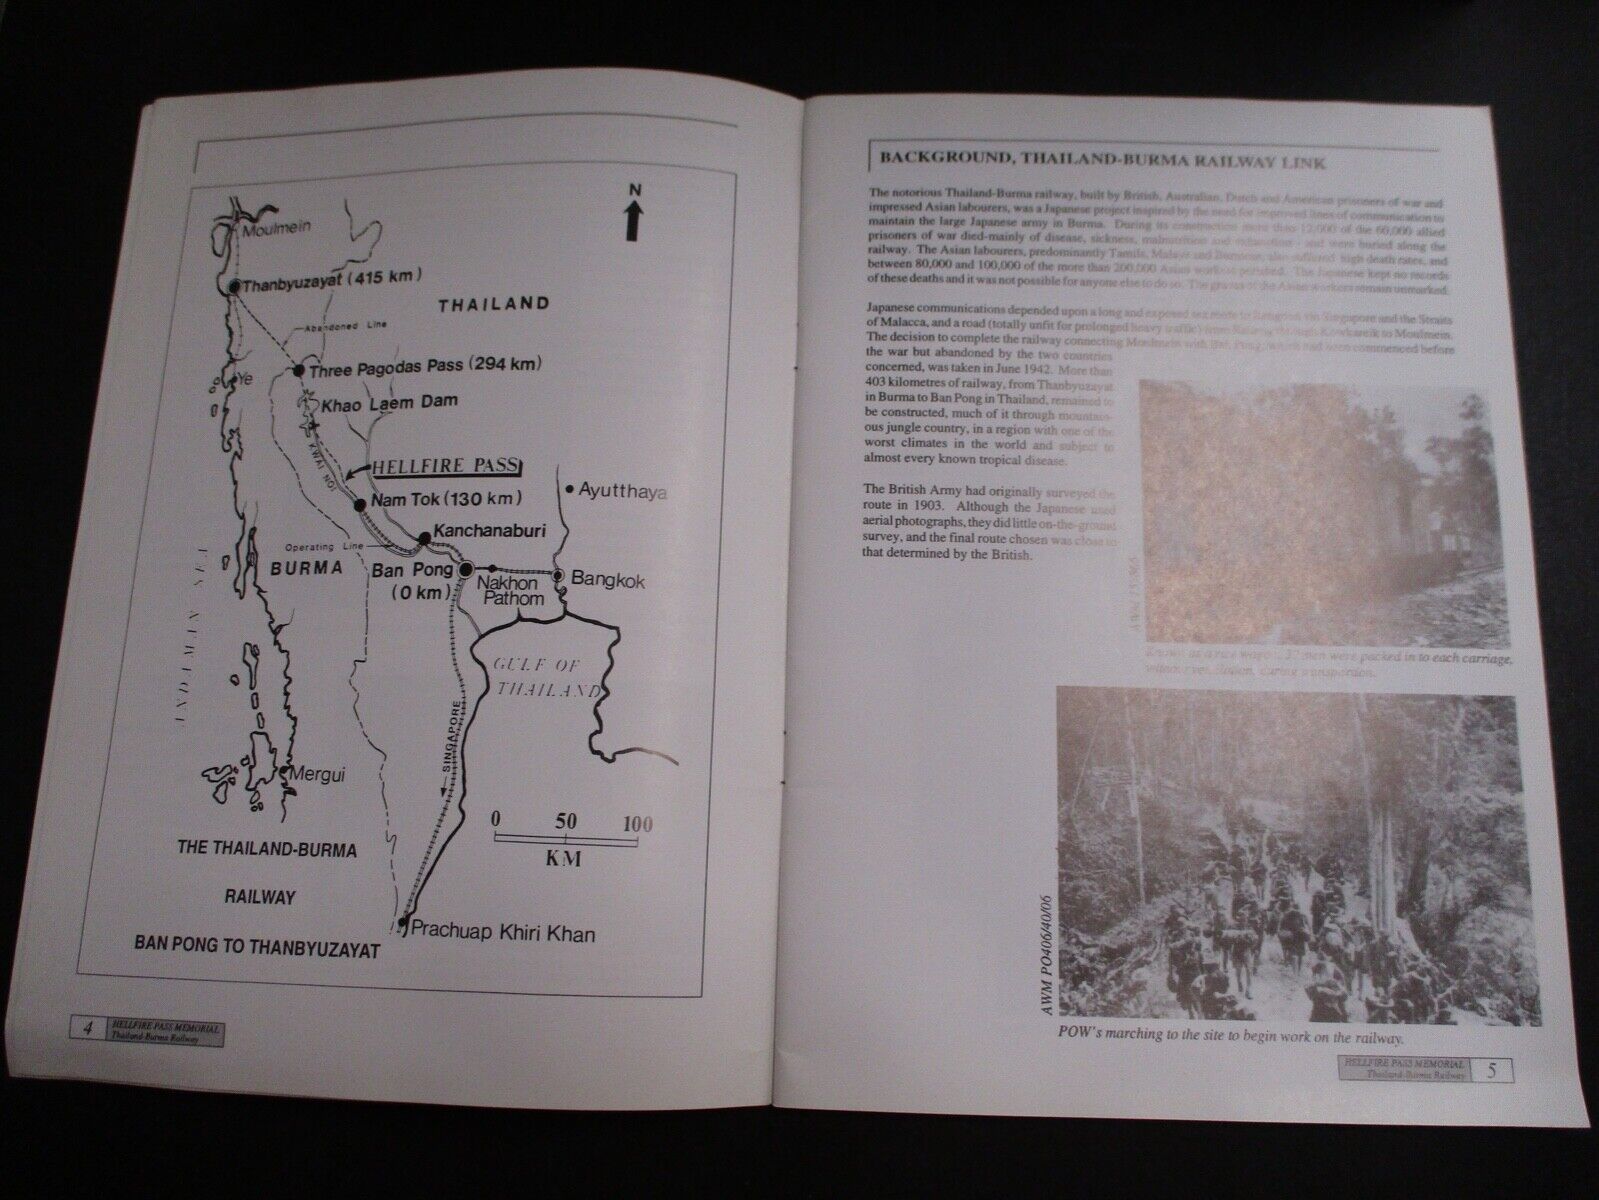 Hellfire Pass Memorial Thailand Burma Railway WWII Booklet VG-EX Condition